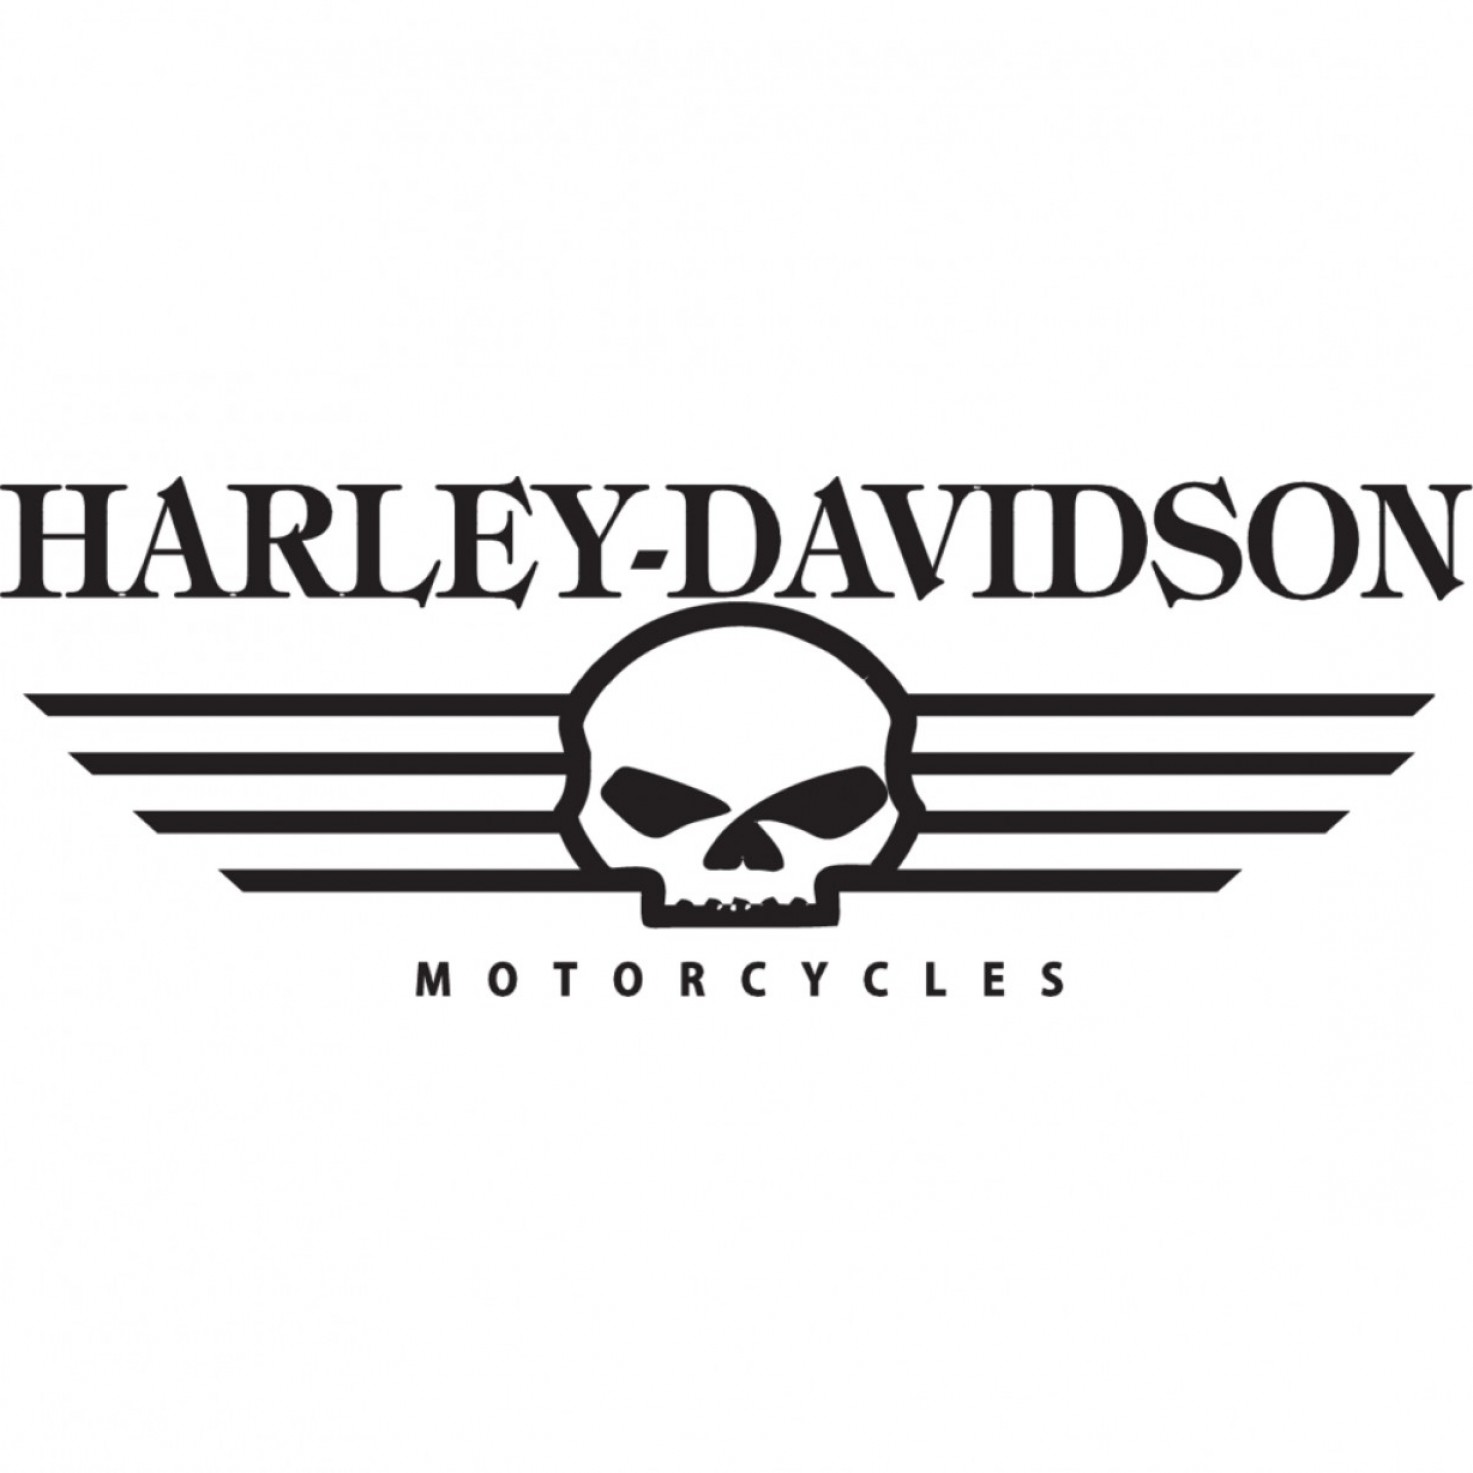 Harley Davidson Skull Logo Vector at Vectorified.com | Collection of ...